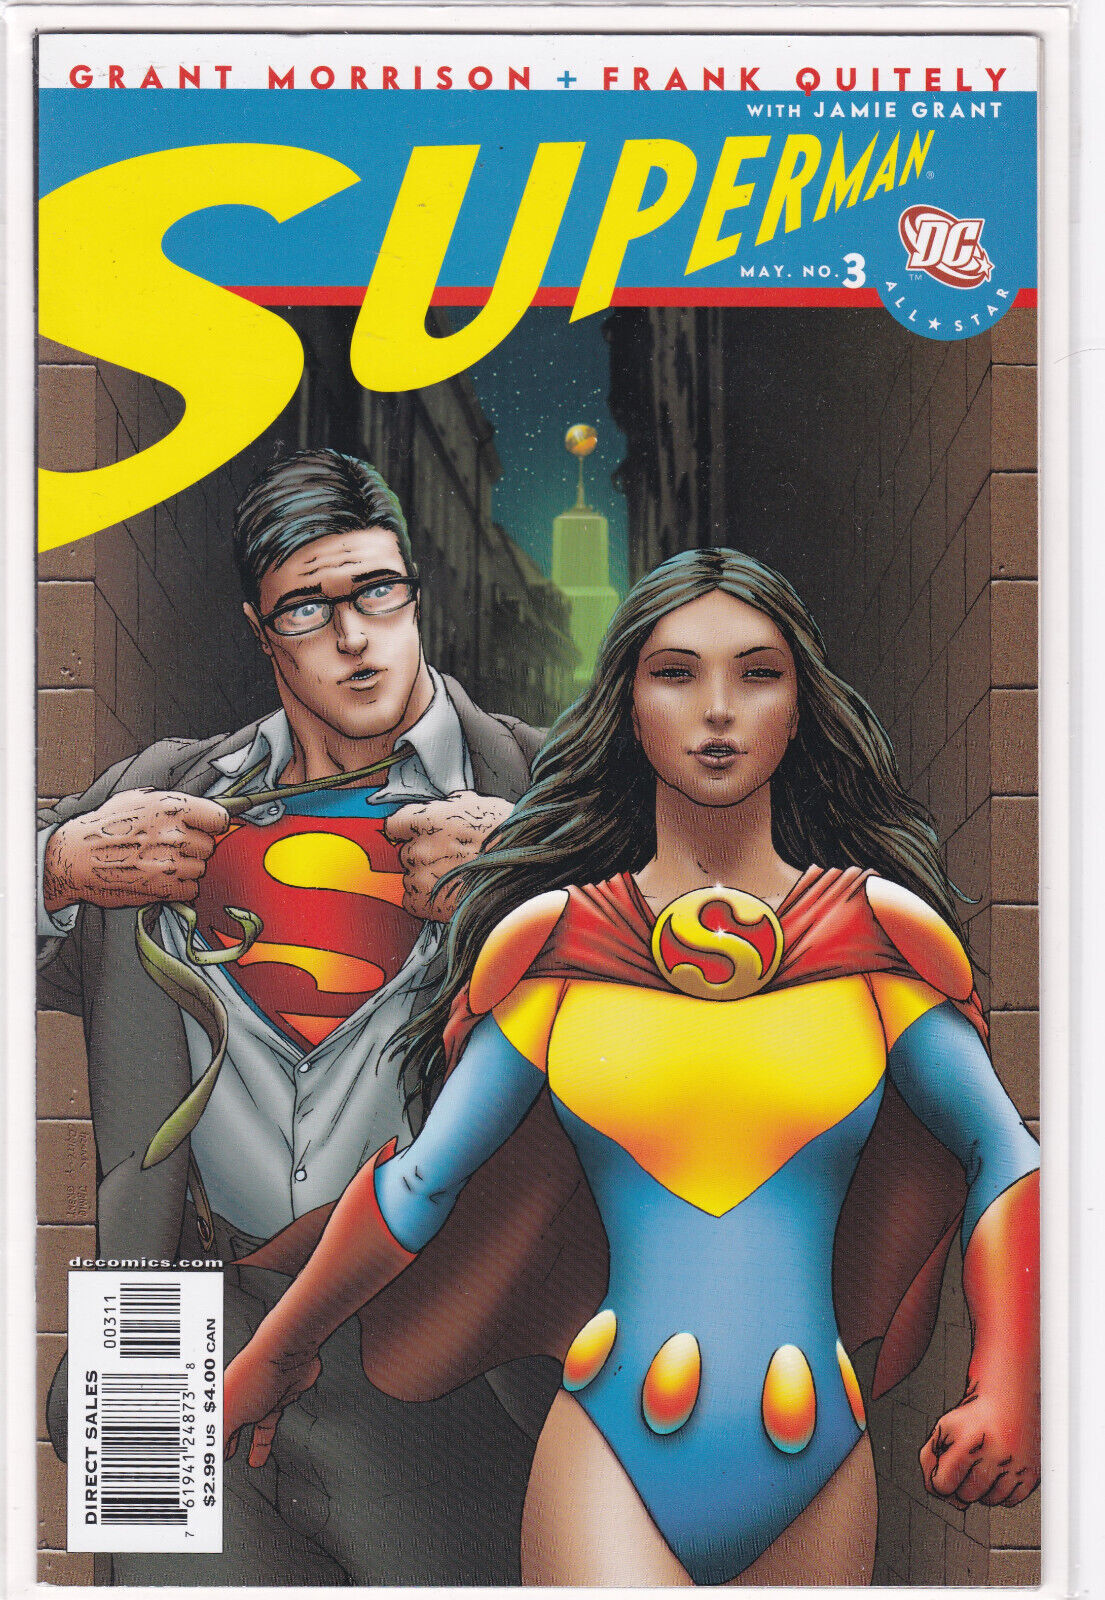 All Star Superman #3 (DC Comics, May 2006) High Grade